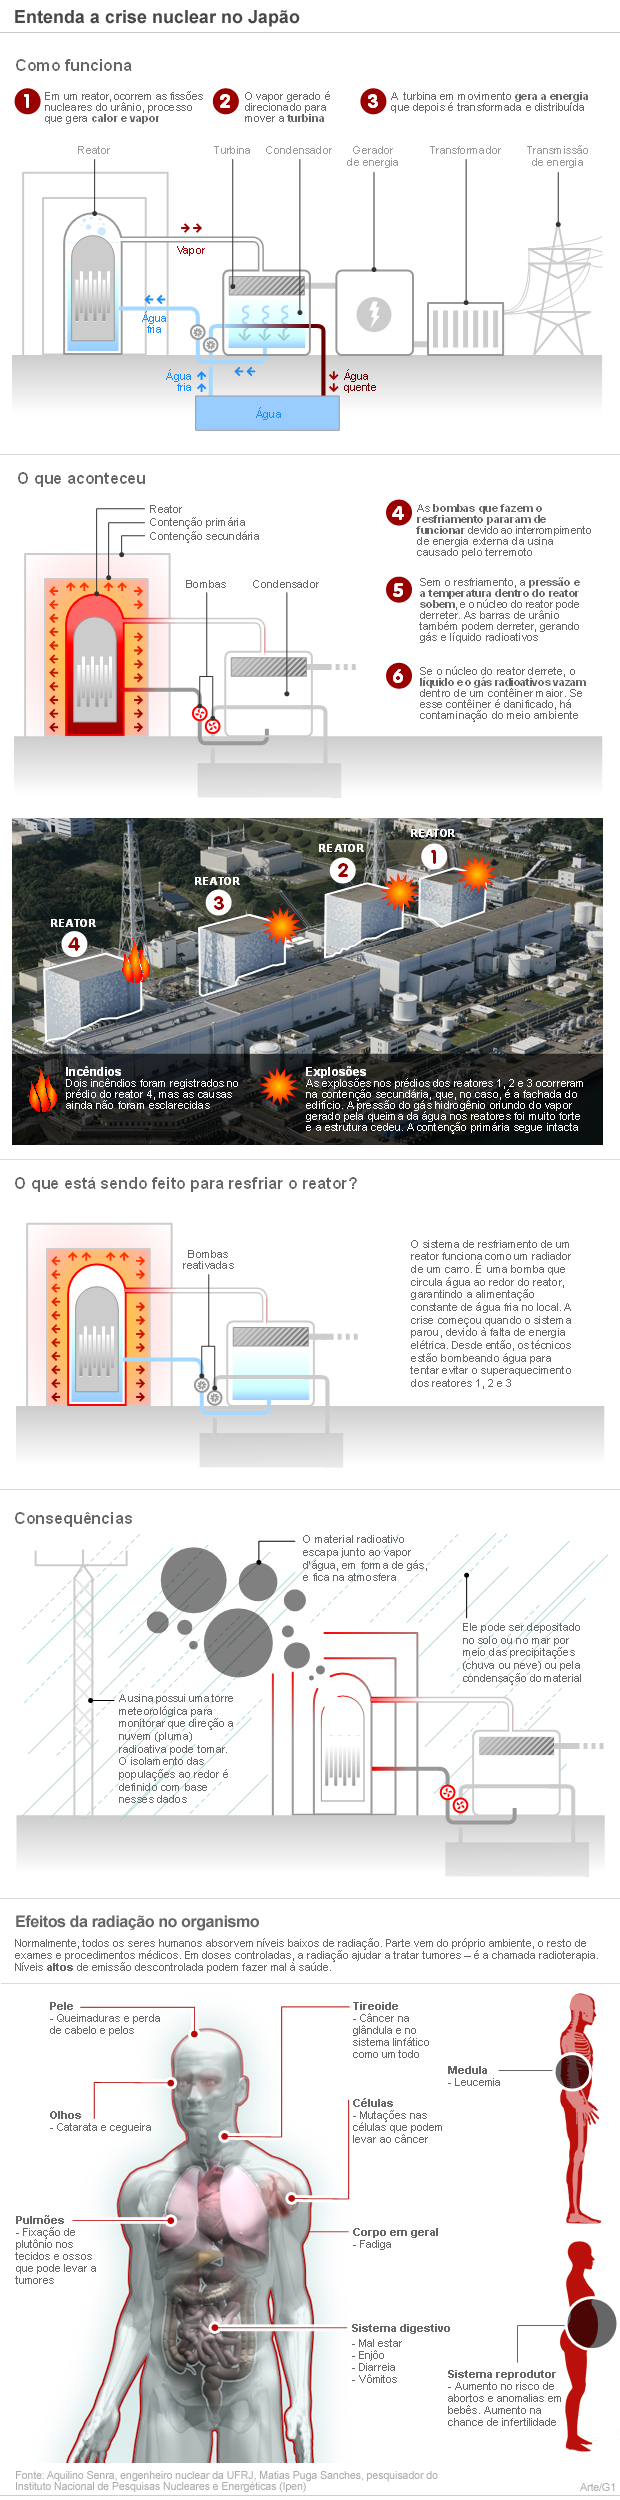 infografico entenda crise nuclear japao (Foto: Arte G1)